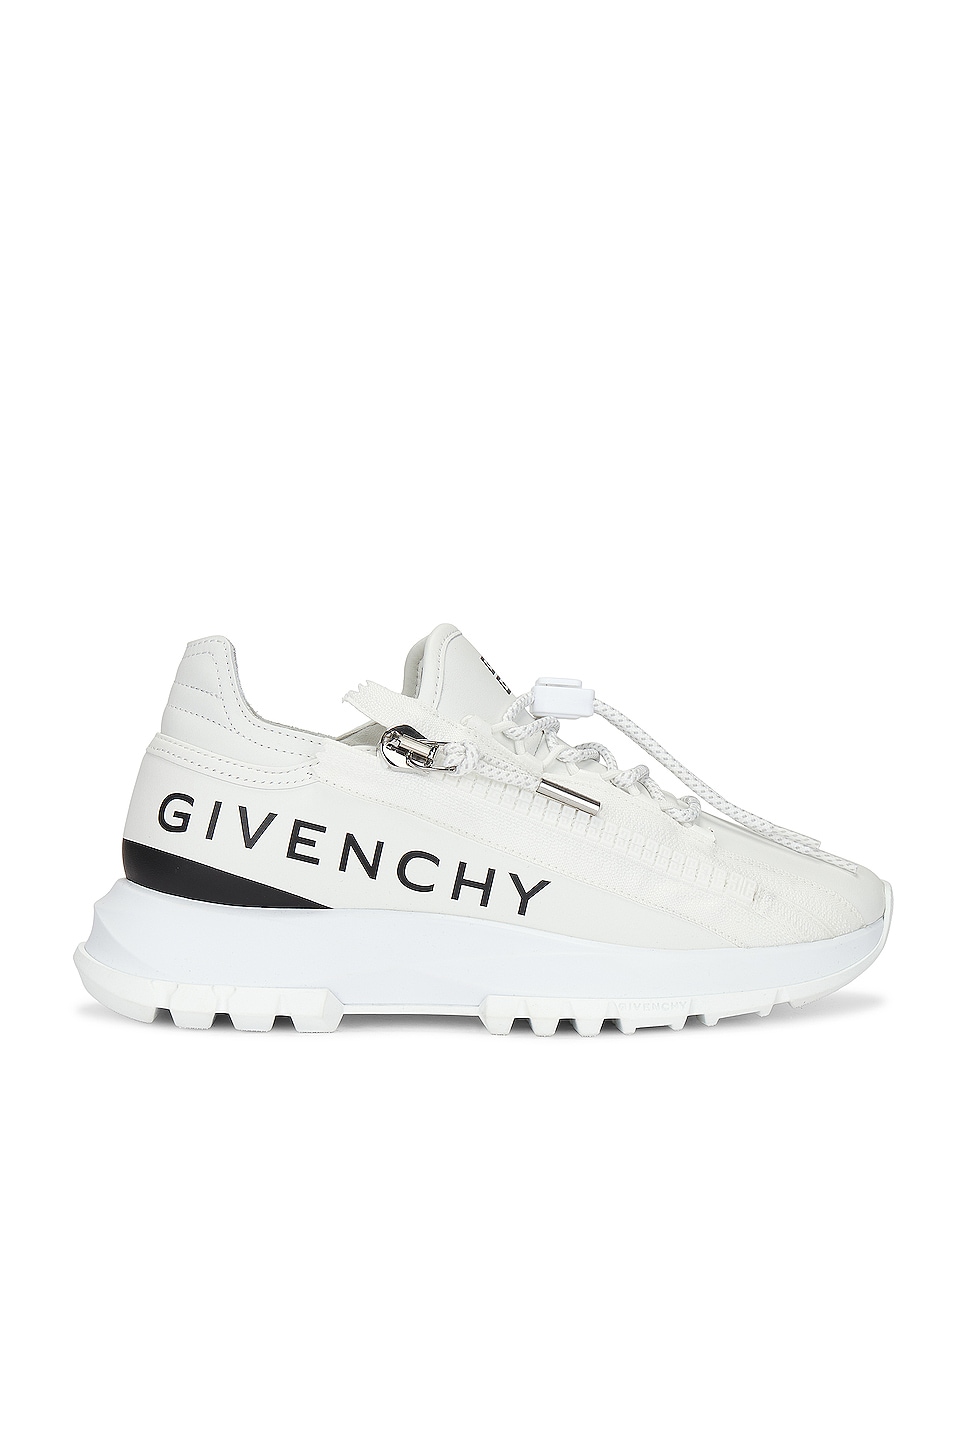 Image 1 of Givenchy Spectre Zip Runner Sneaker in White & Black